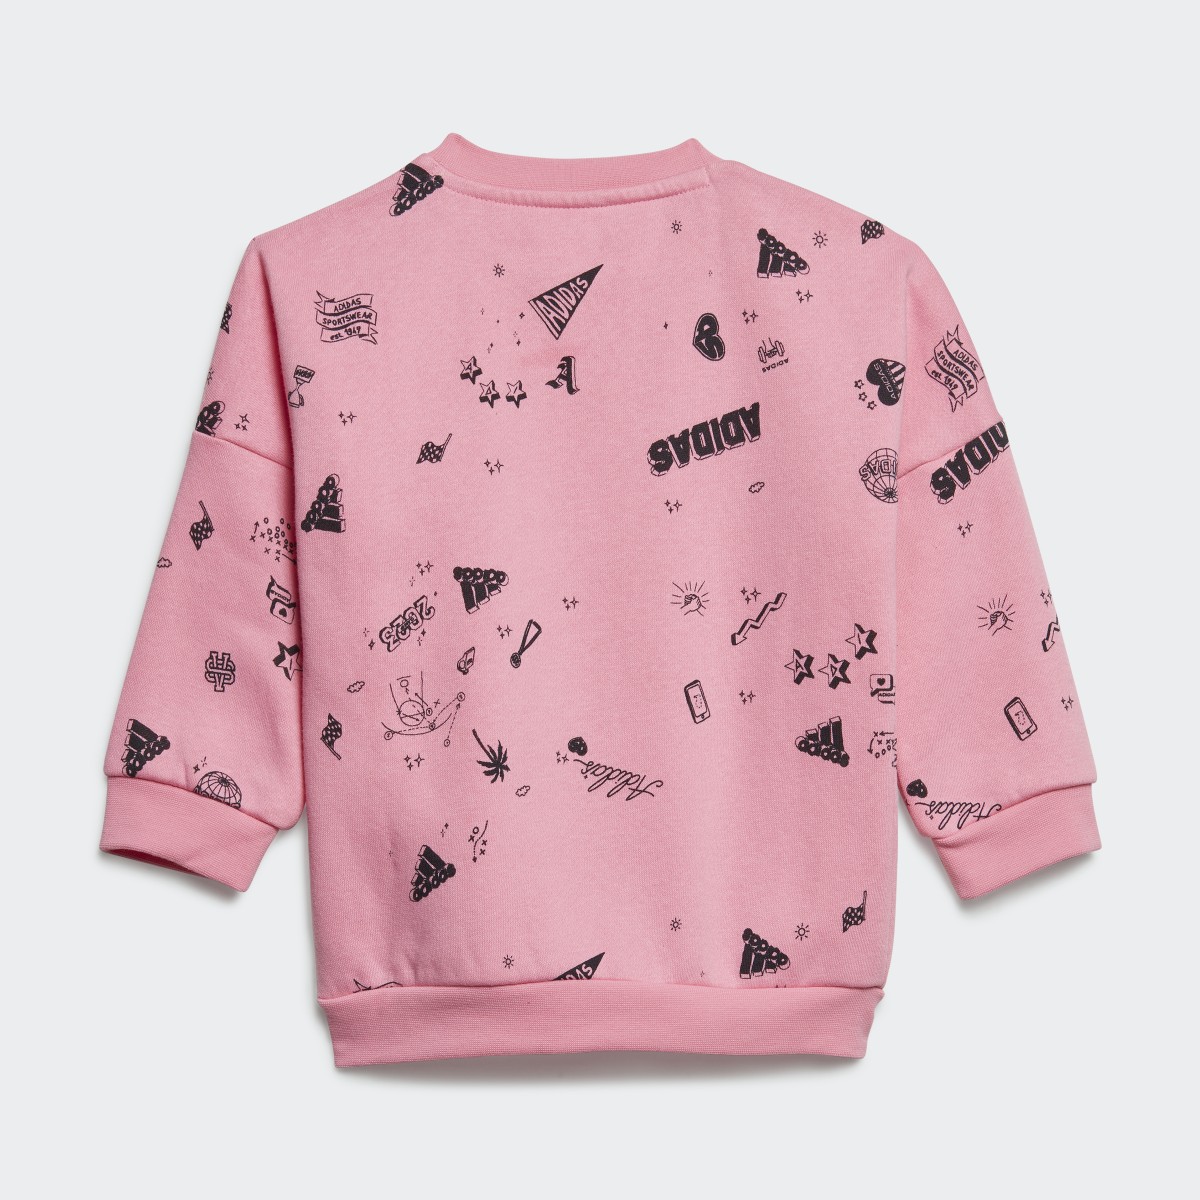 Adidas Completo Brand Love Crew Sweatshirt Infant. 4